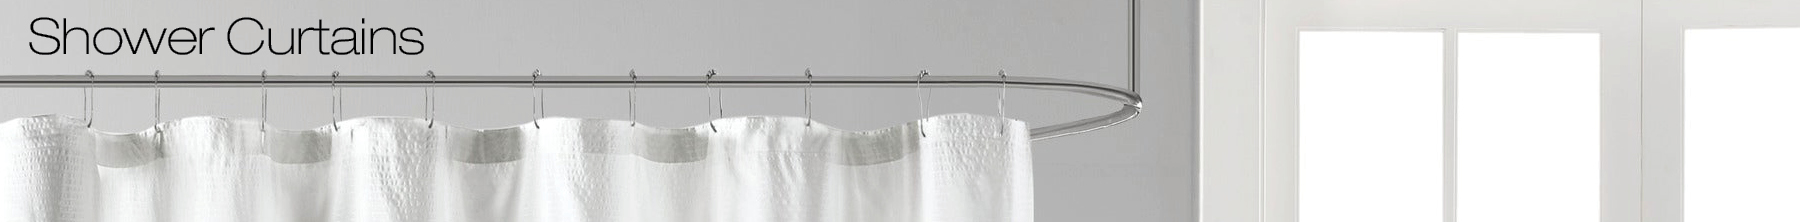 shower-curtains